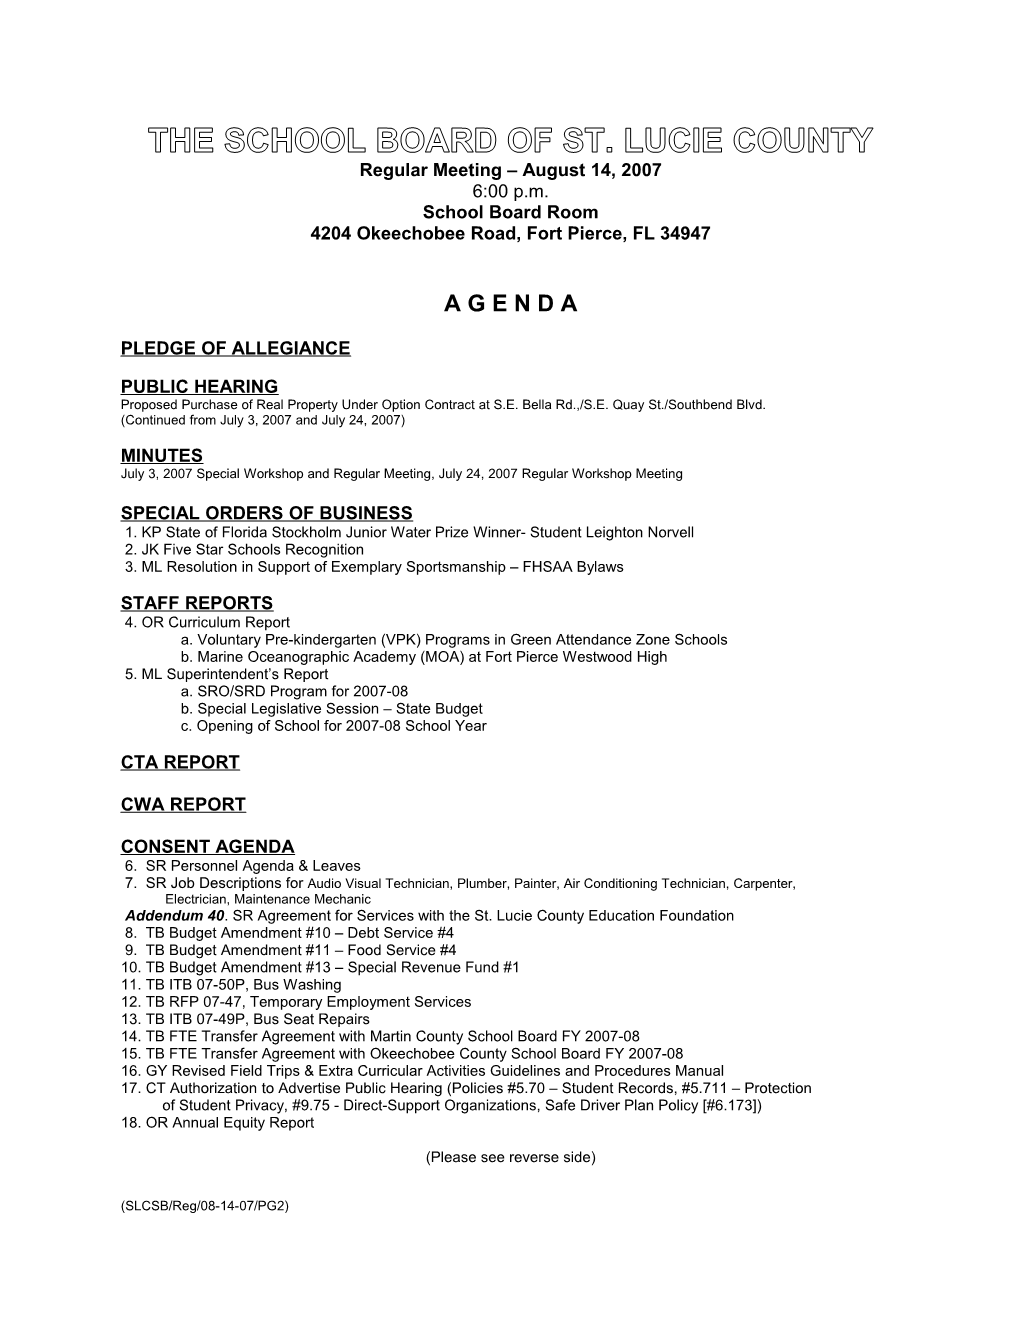 08-14-07 SLCSB Regular Meeting Agenda